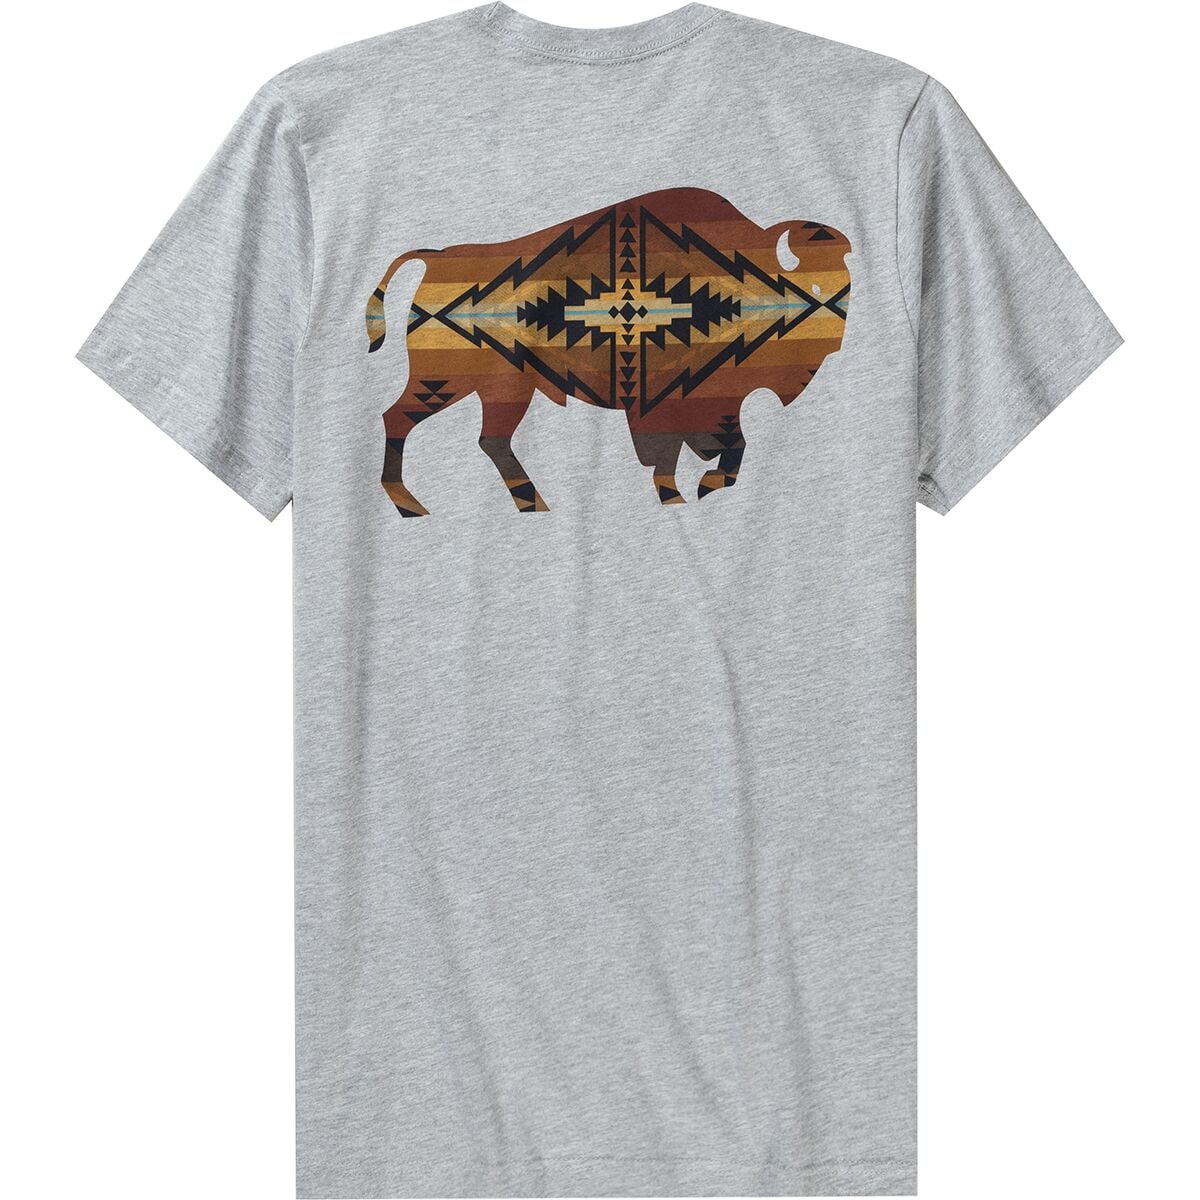 Pendleton Trapper Peak Heather Graphic T-Shirt - Men's